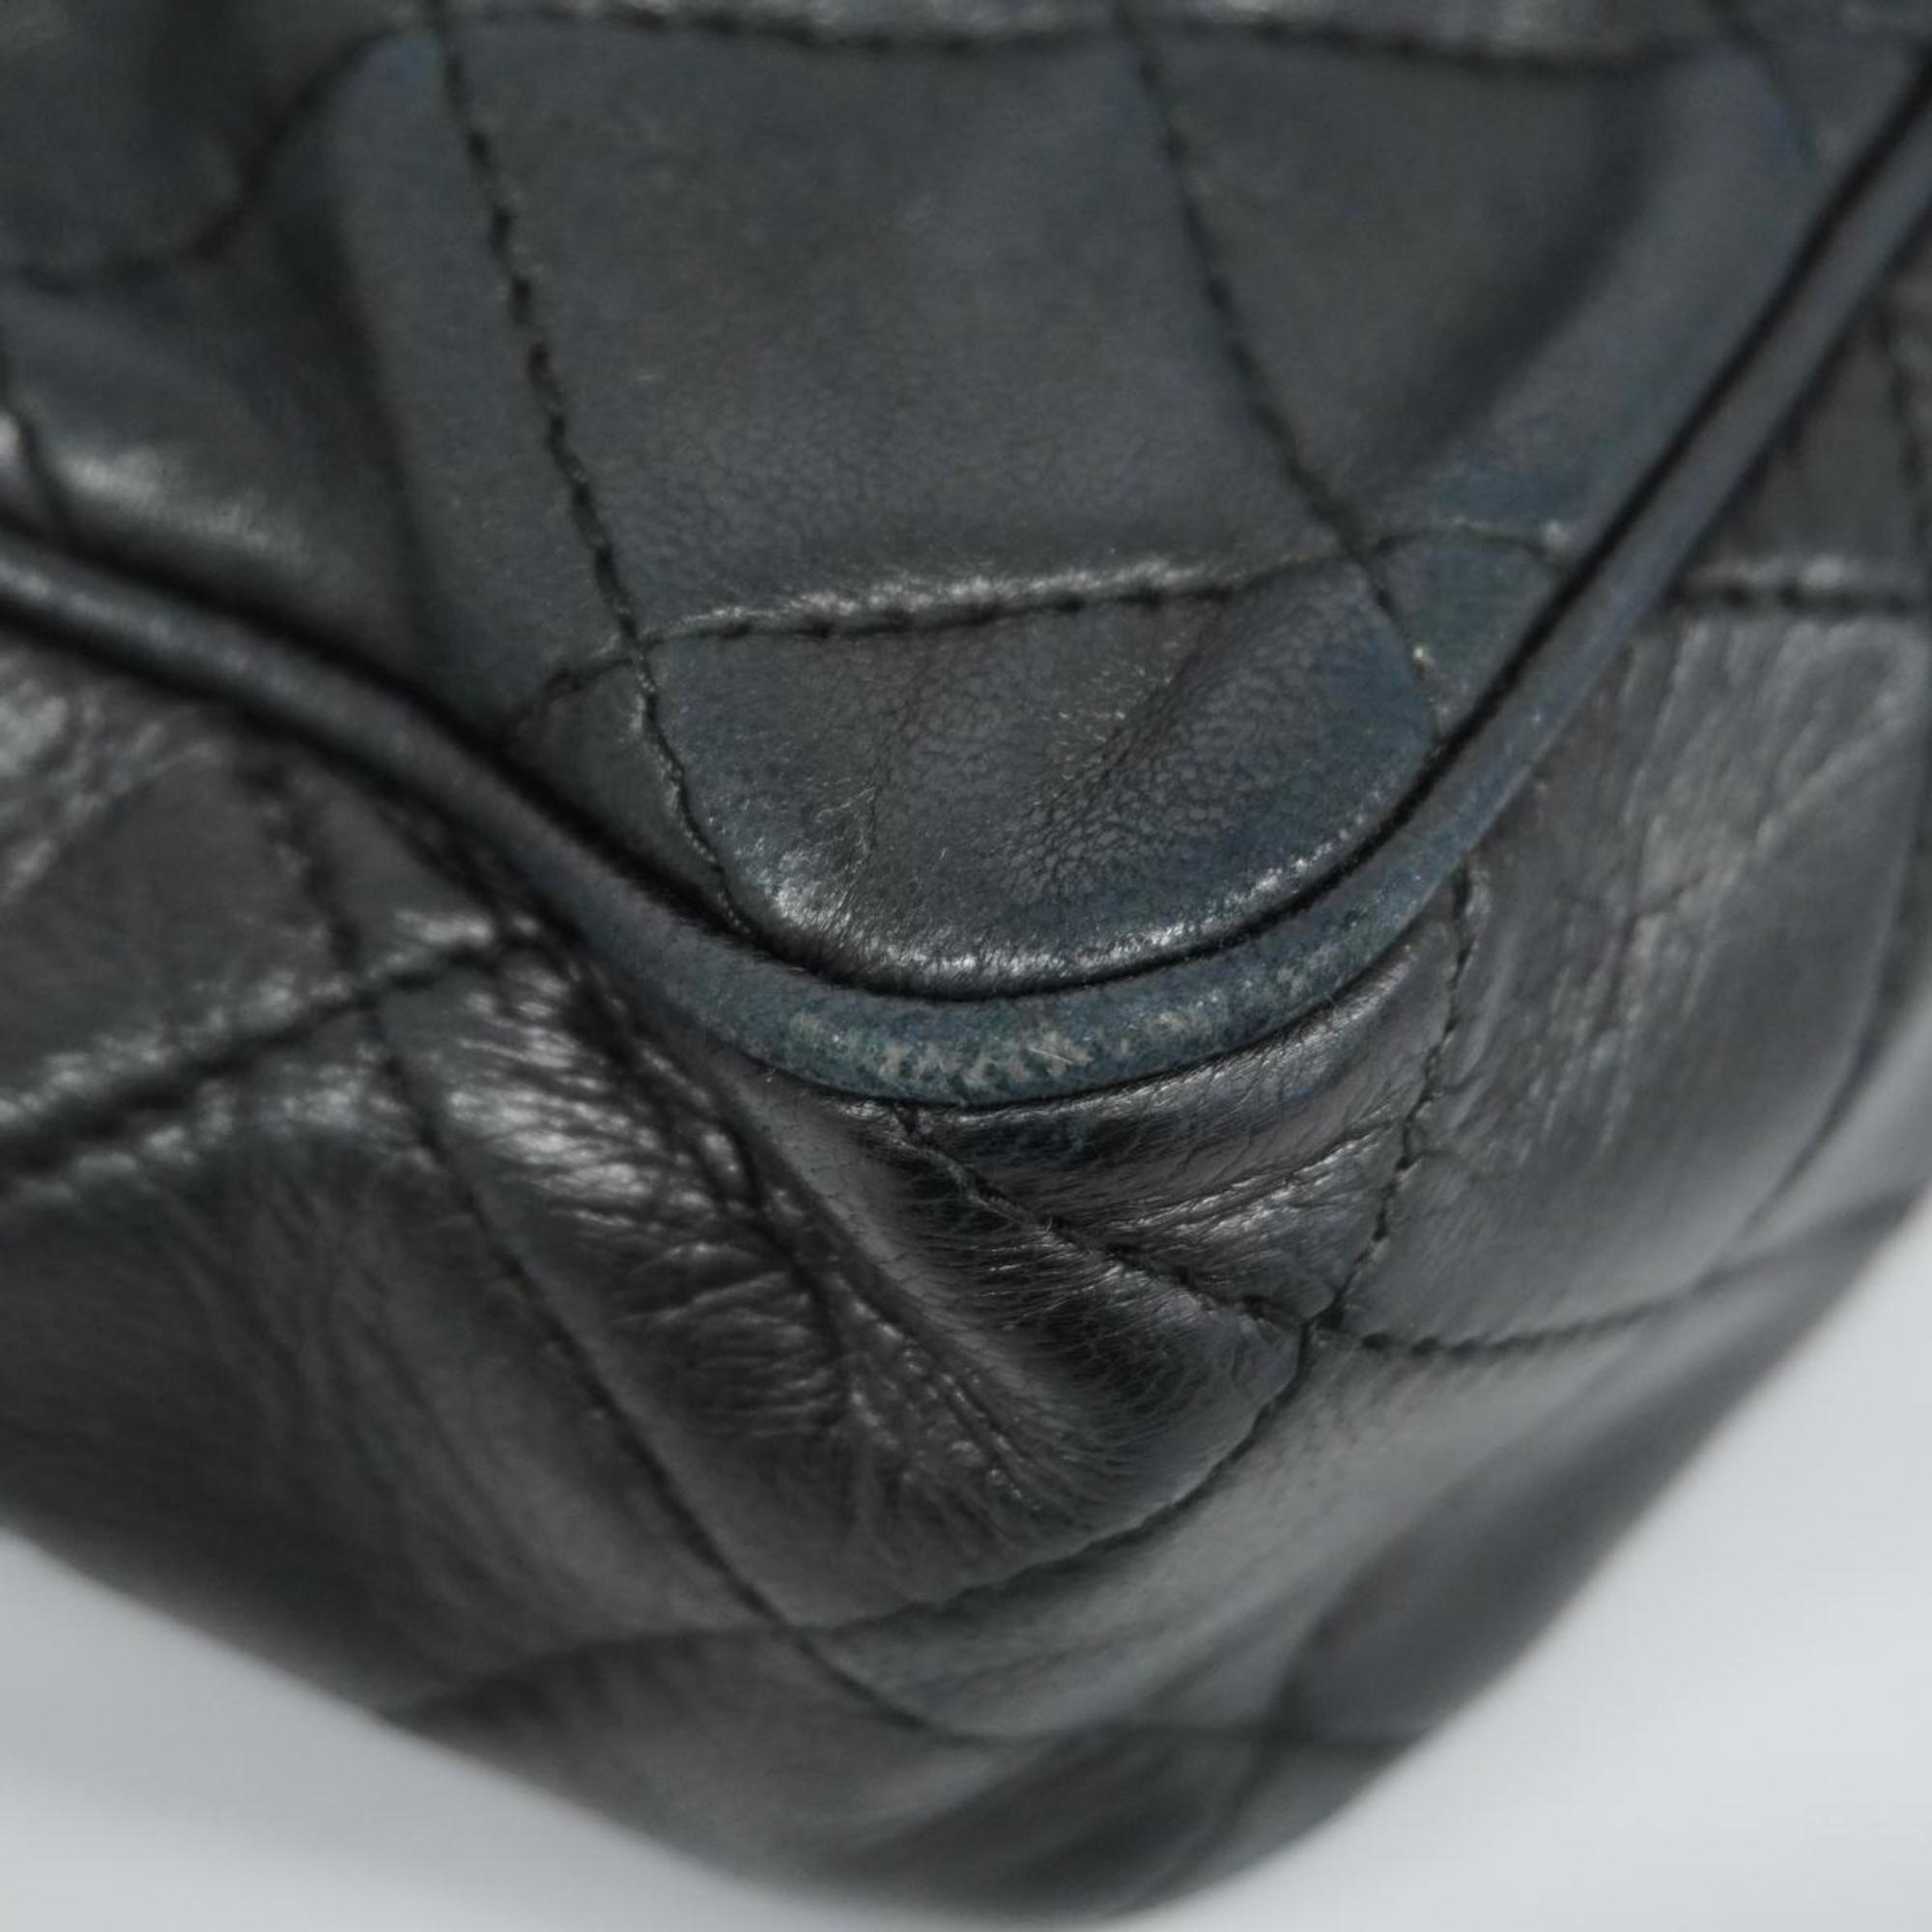 Chanel Shoulder Bag with Matelasse Chain Bag, Lambskin, Black, Women's